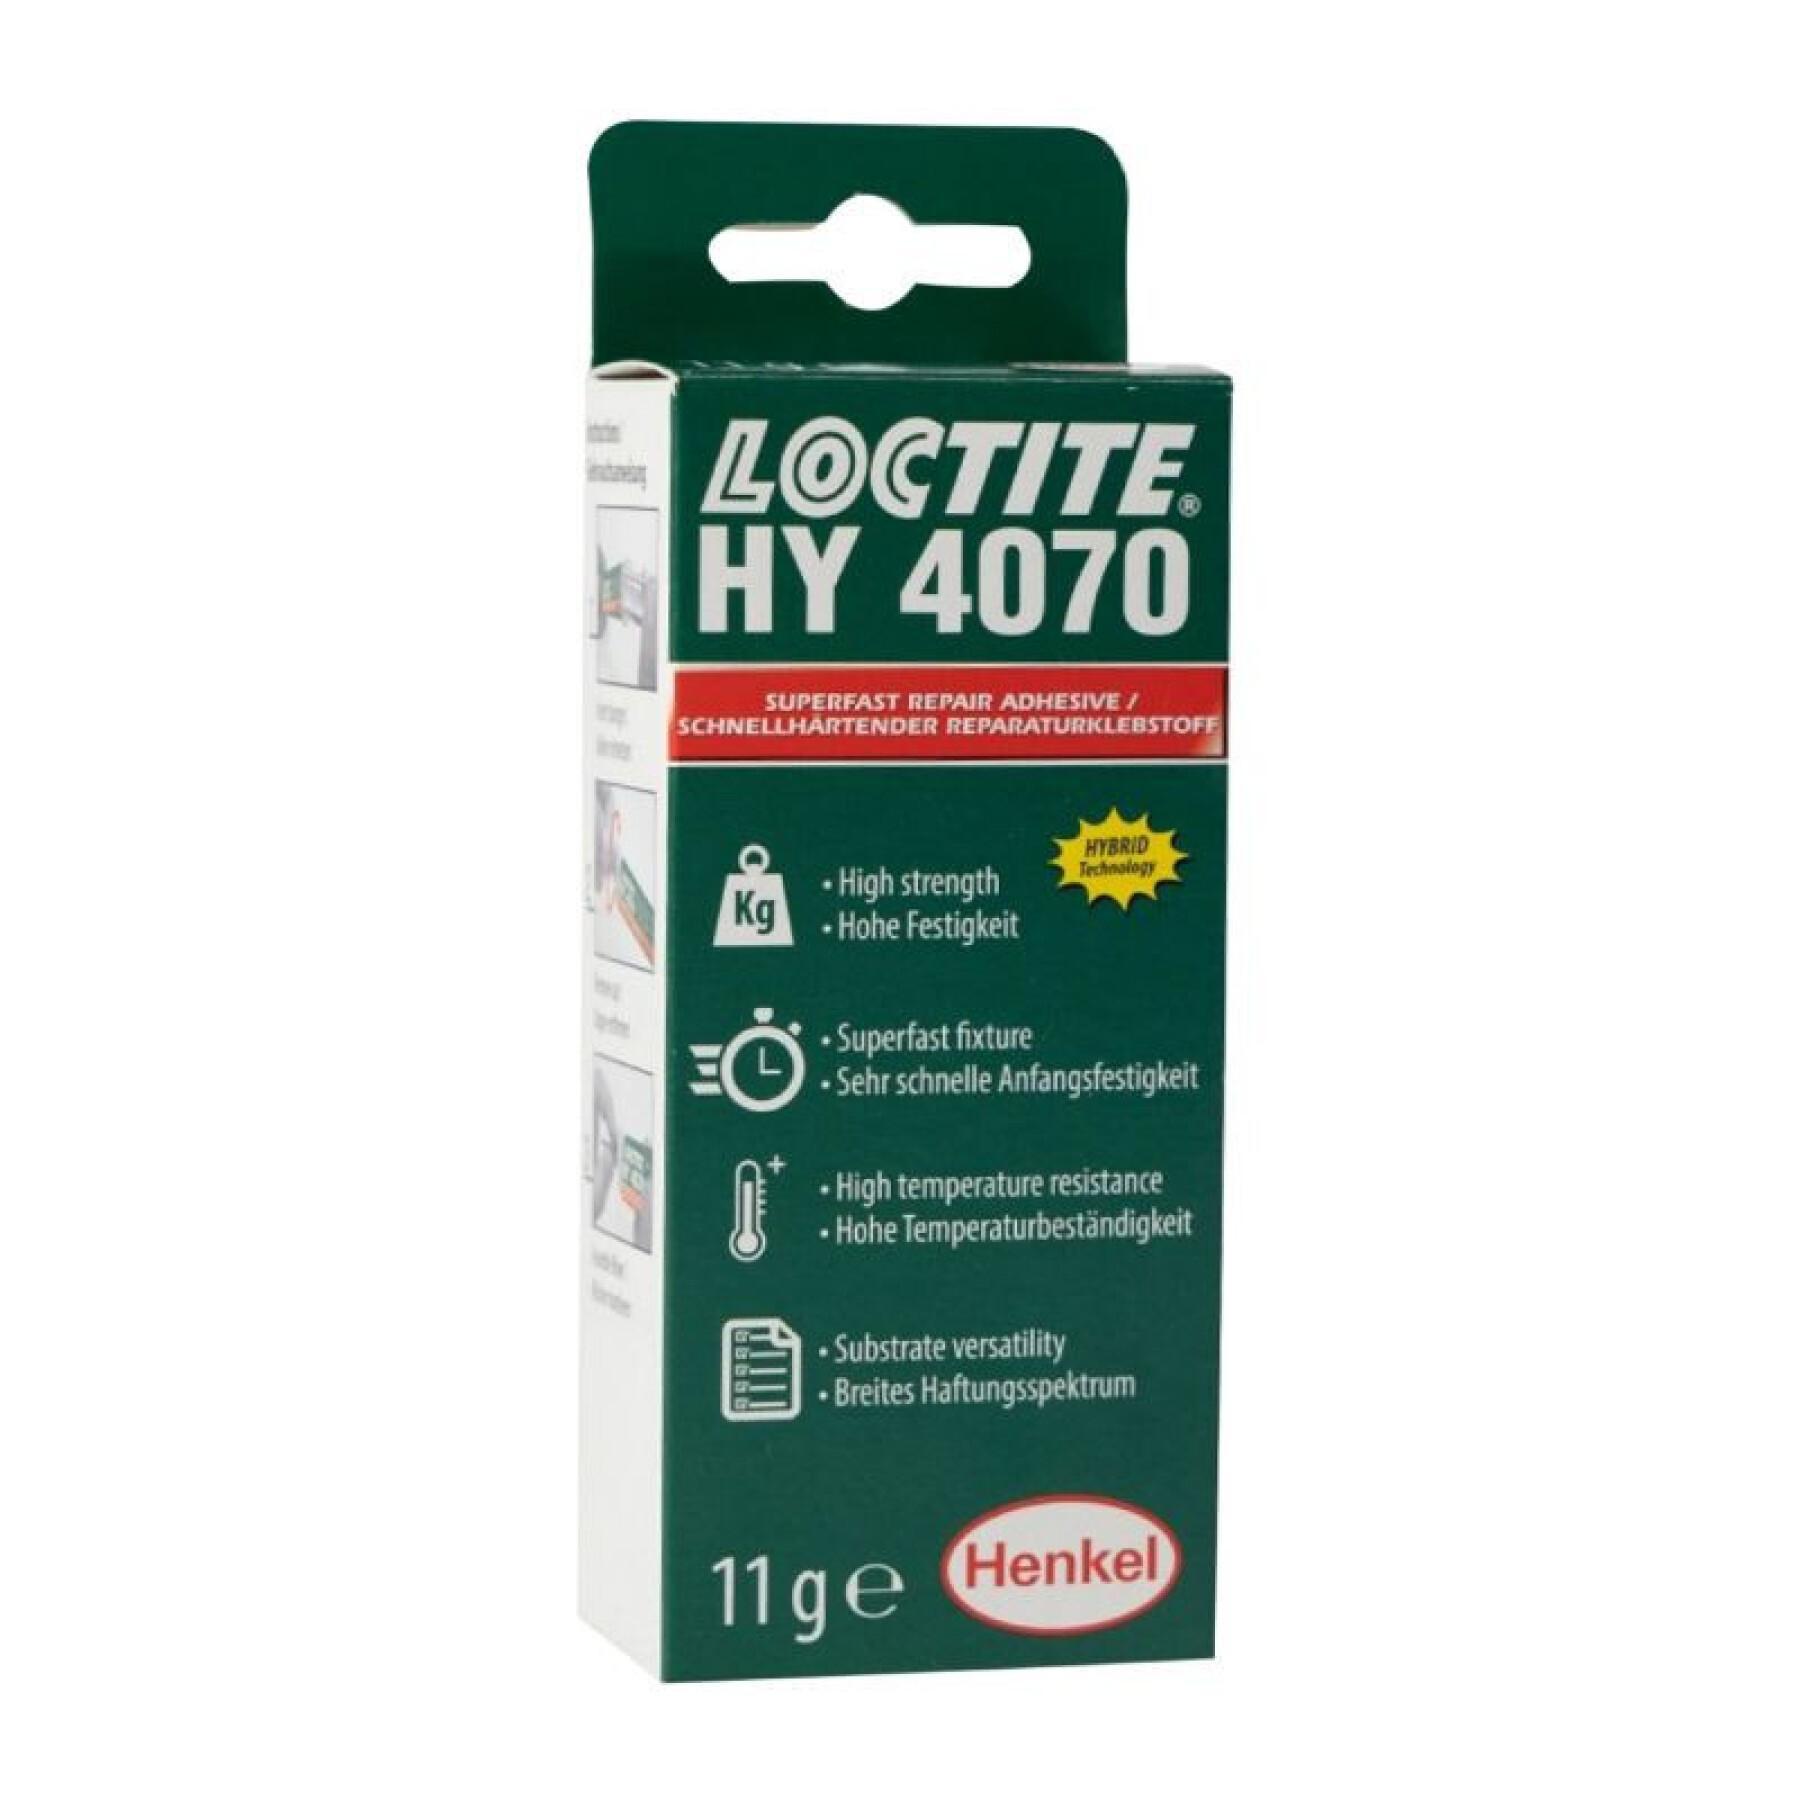 Multi-purpose repair adhesive Loctite HY 4070 Prise